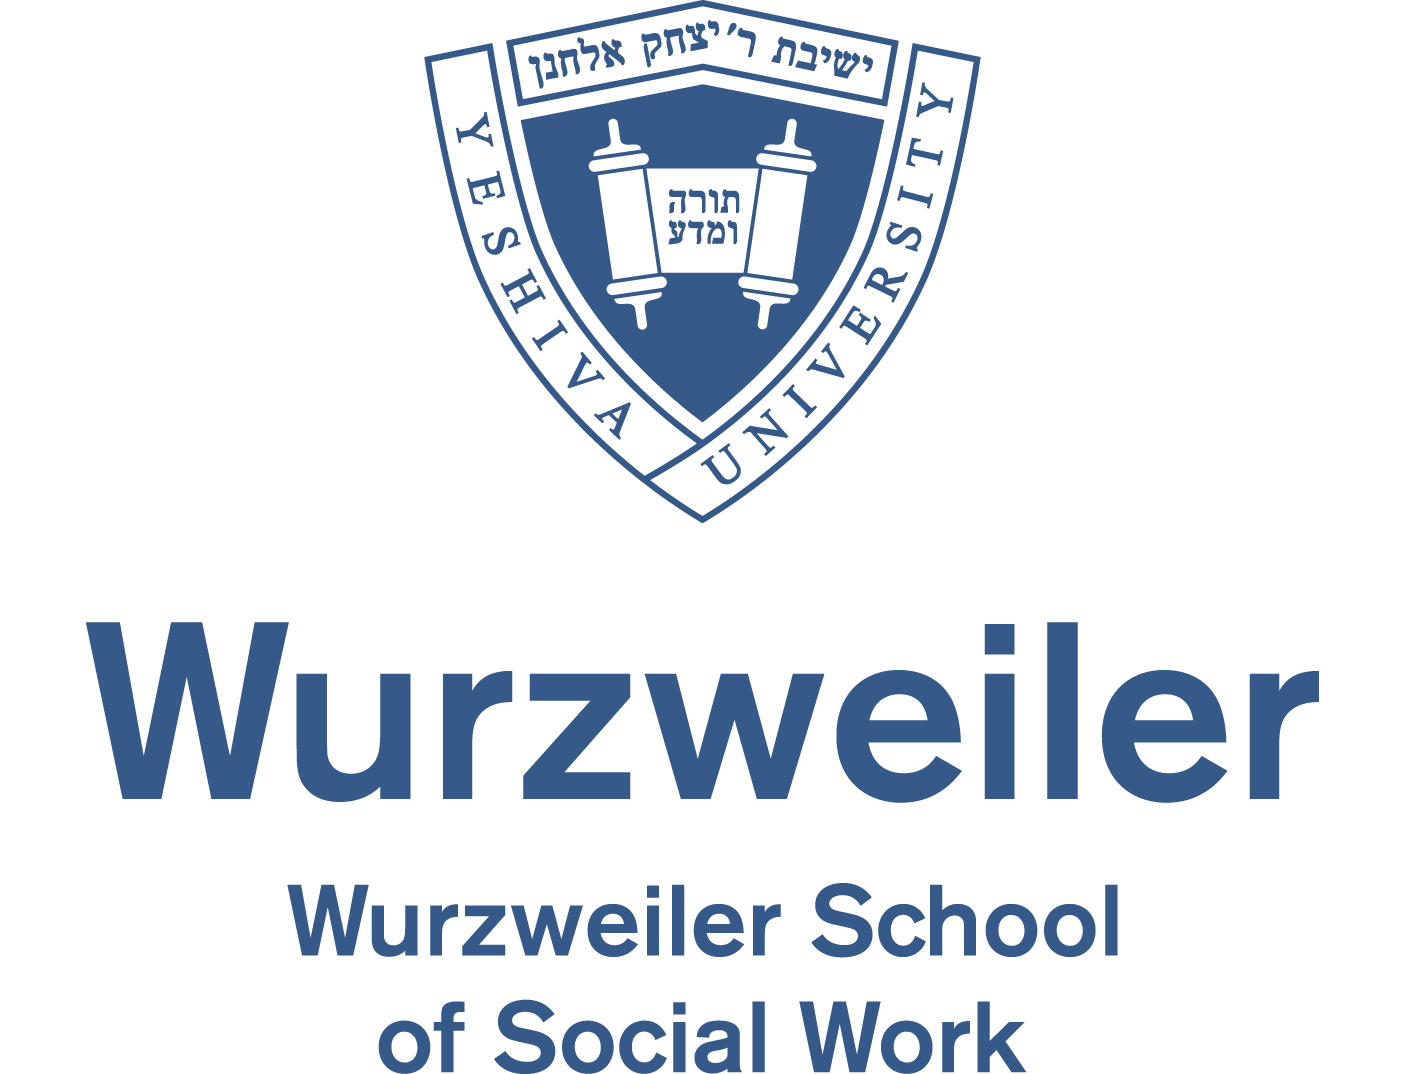 Wurzweiler School of Social Work